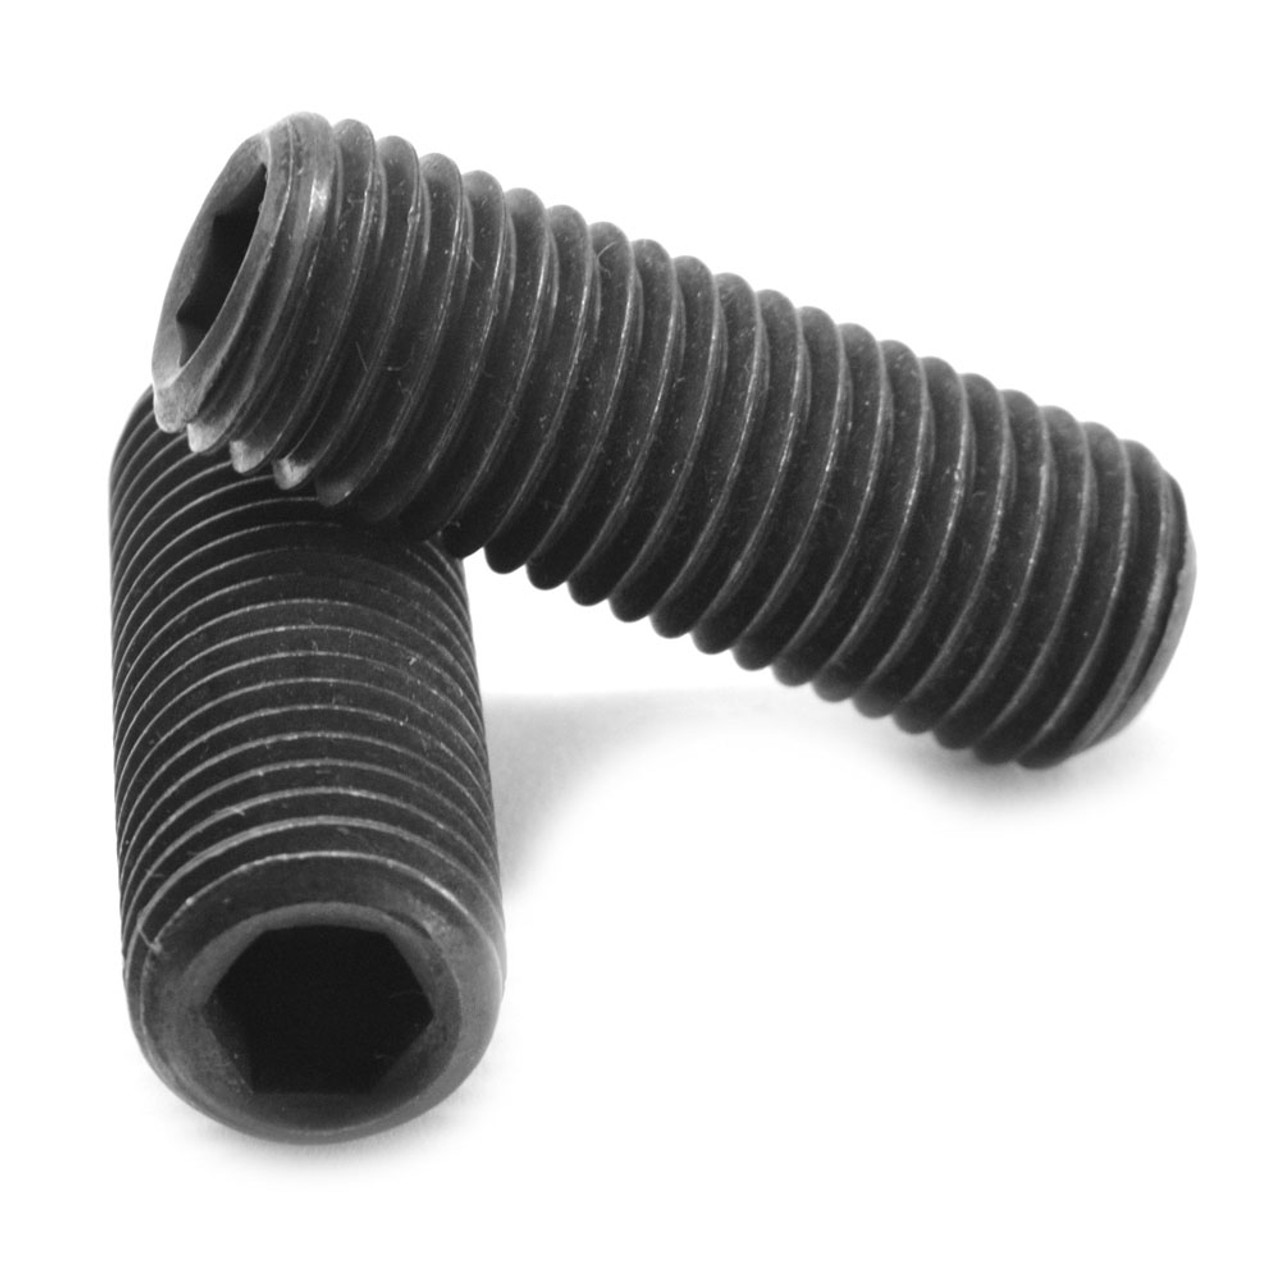 M14 x 2.00 x 45 MM Coarse Thread ISO 4029 / DIN 916 Class 45H Socket Set Screw Cup Point Alloy Steel Black Oxide